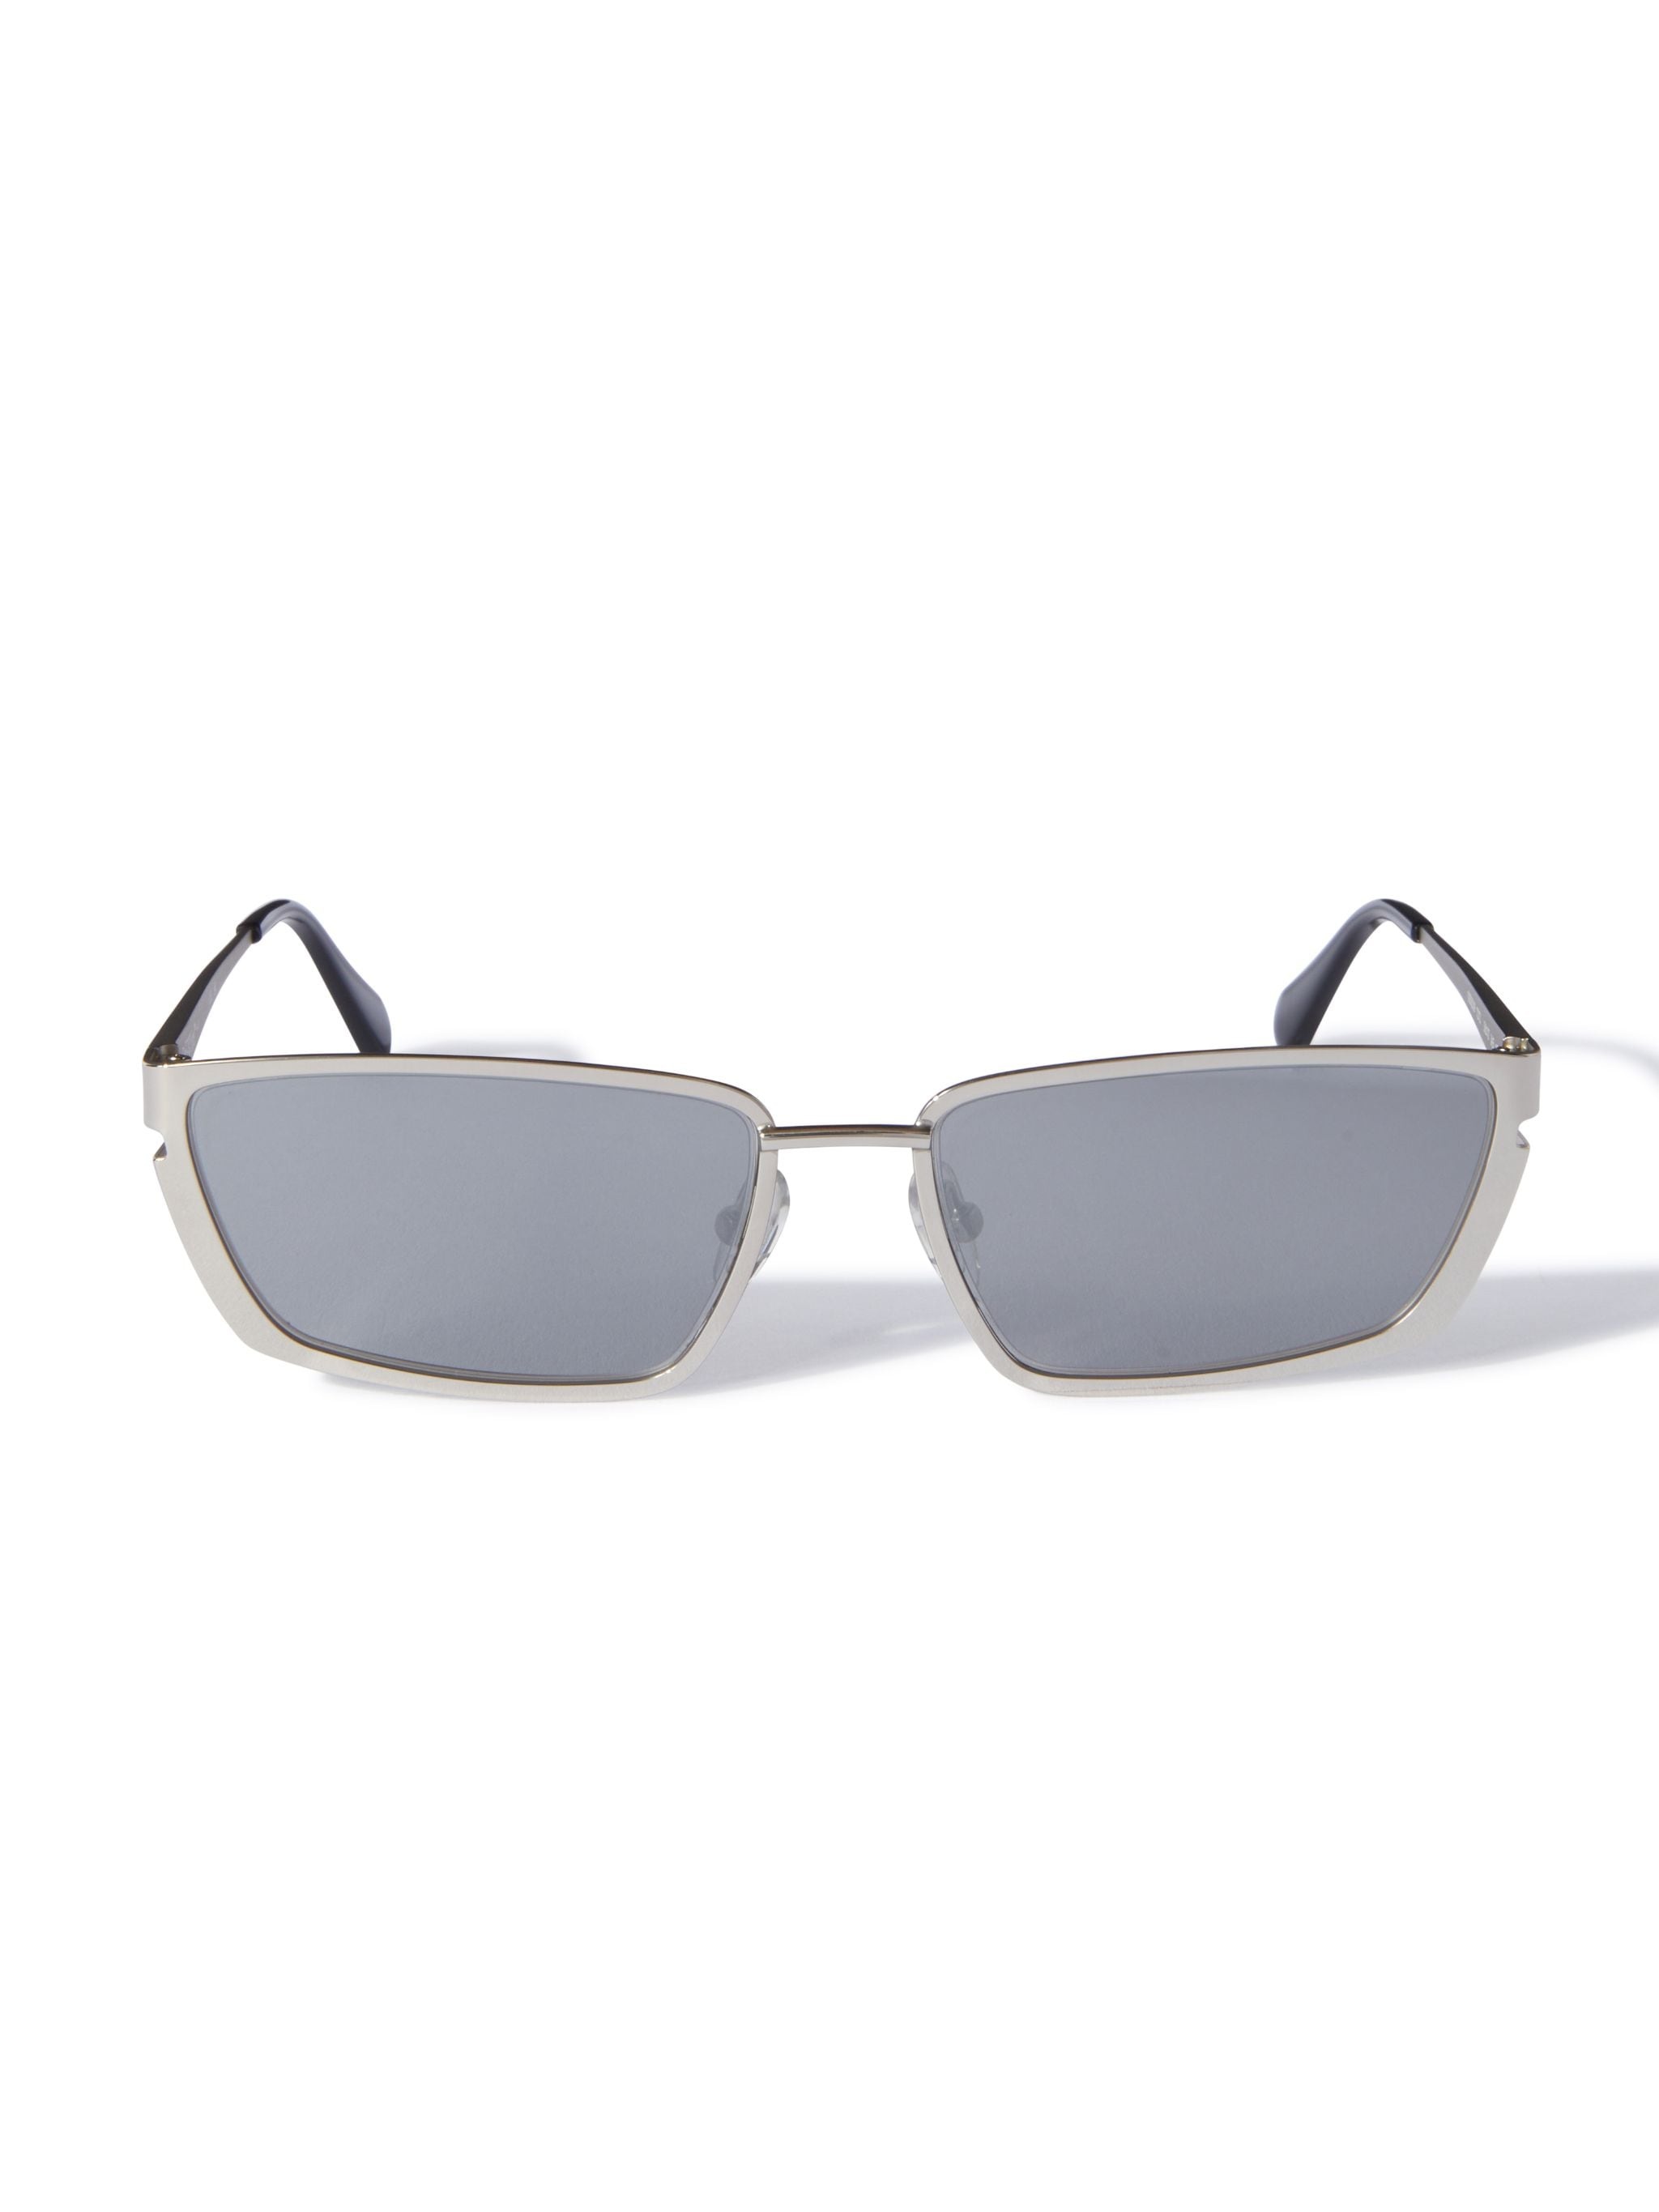 Richfield Sunglasses - 1